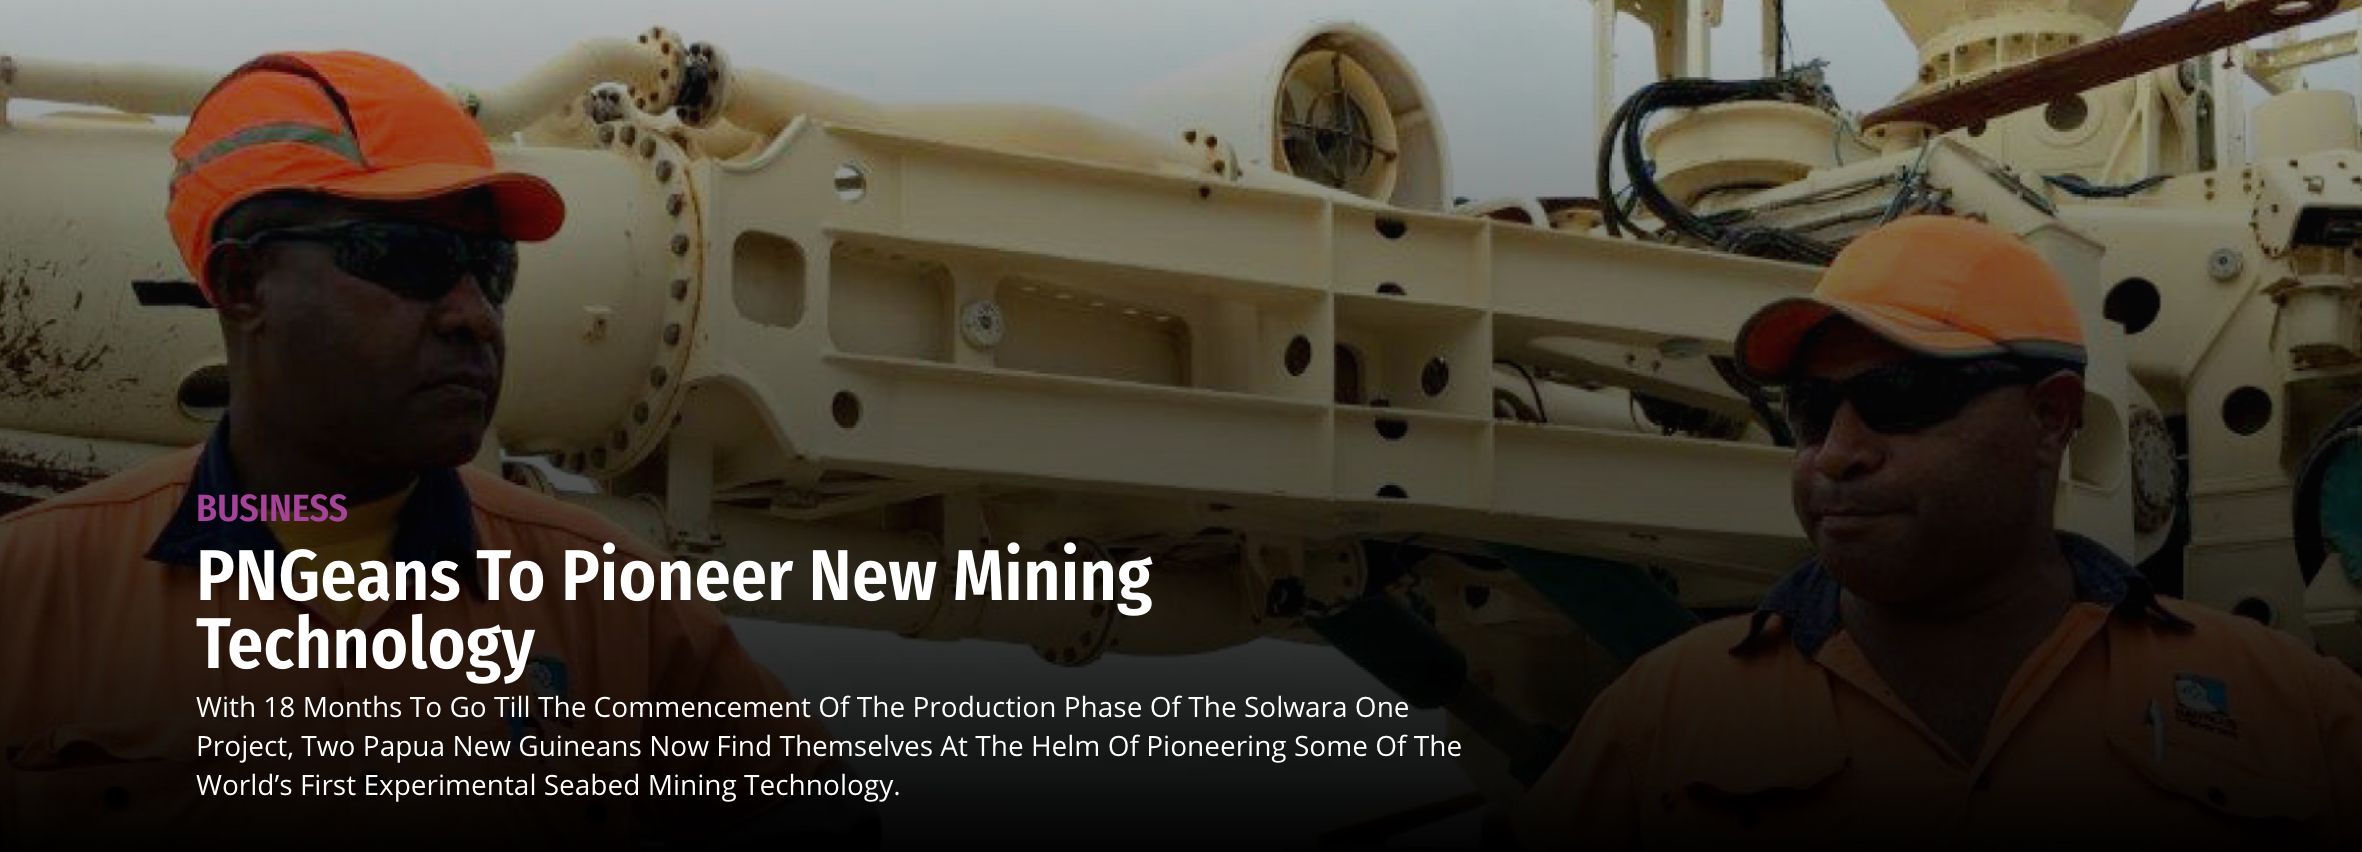 mining technology